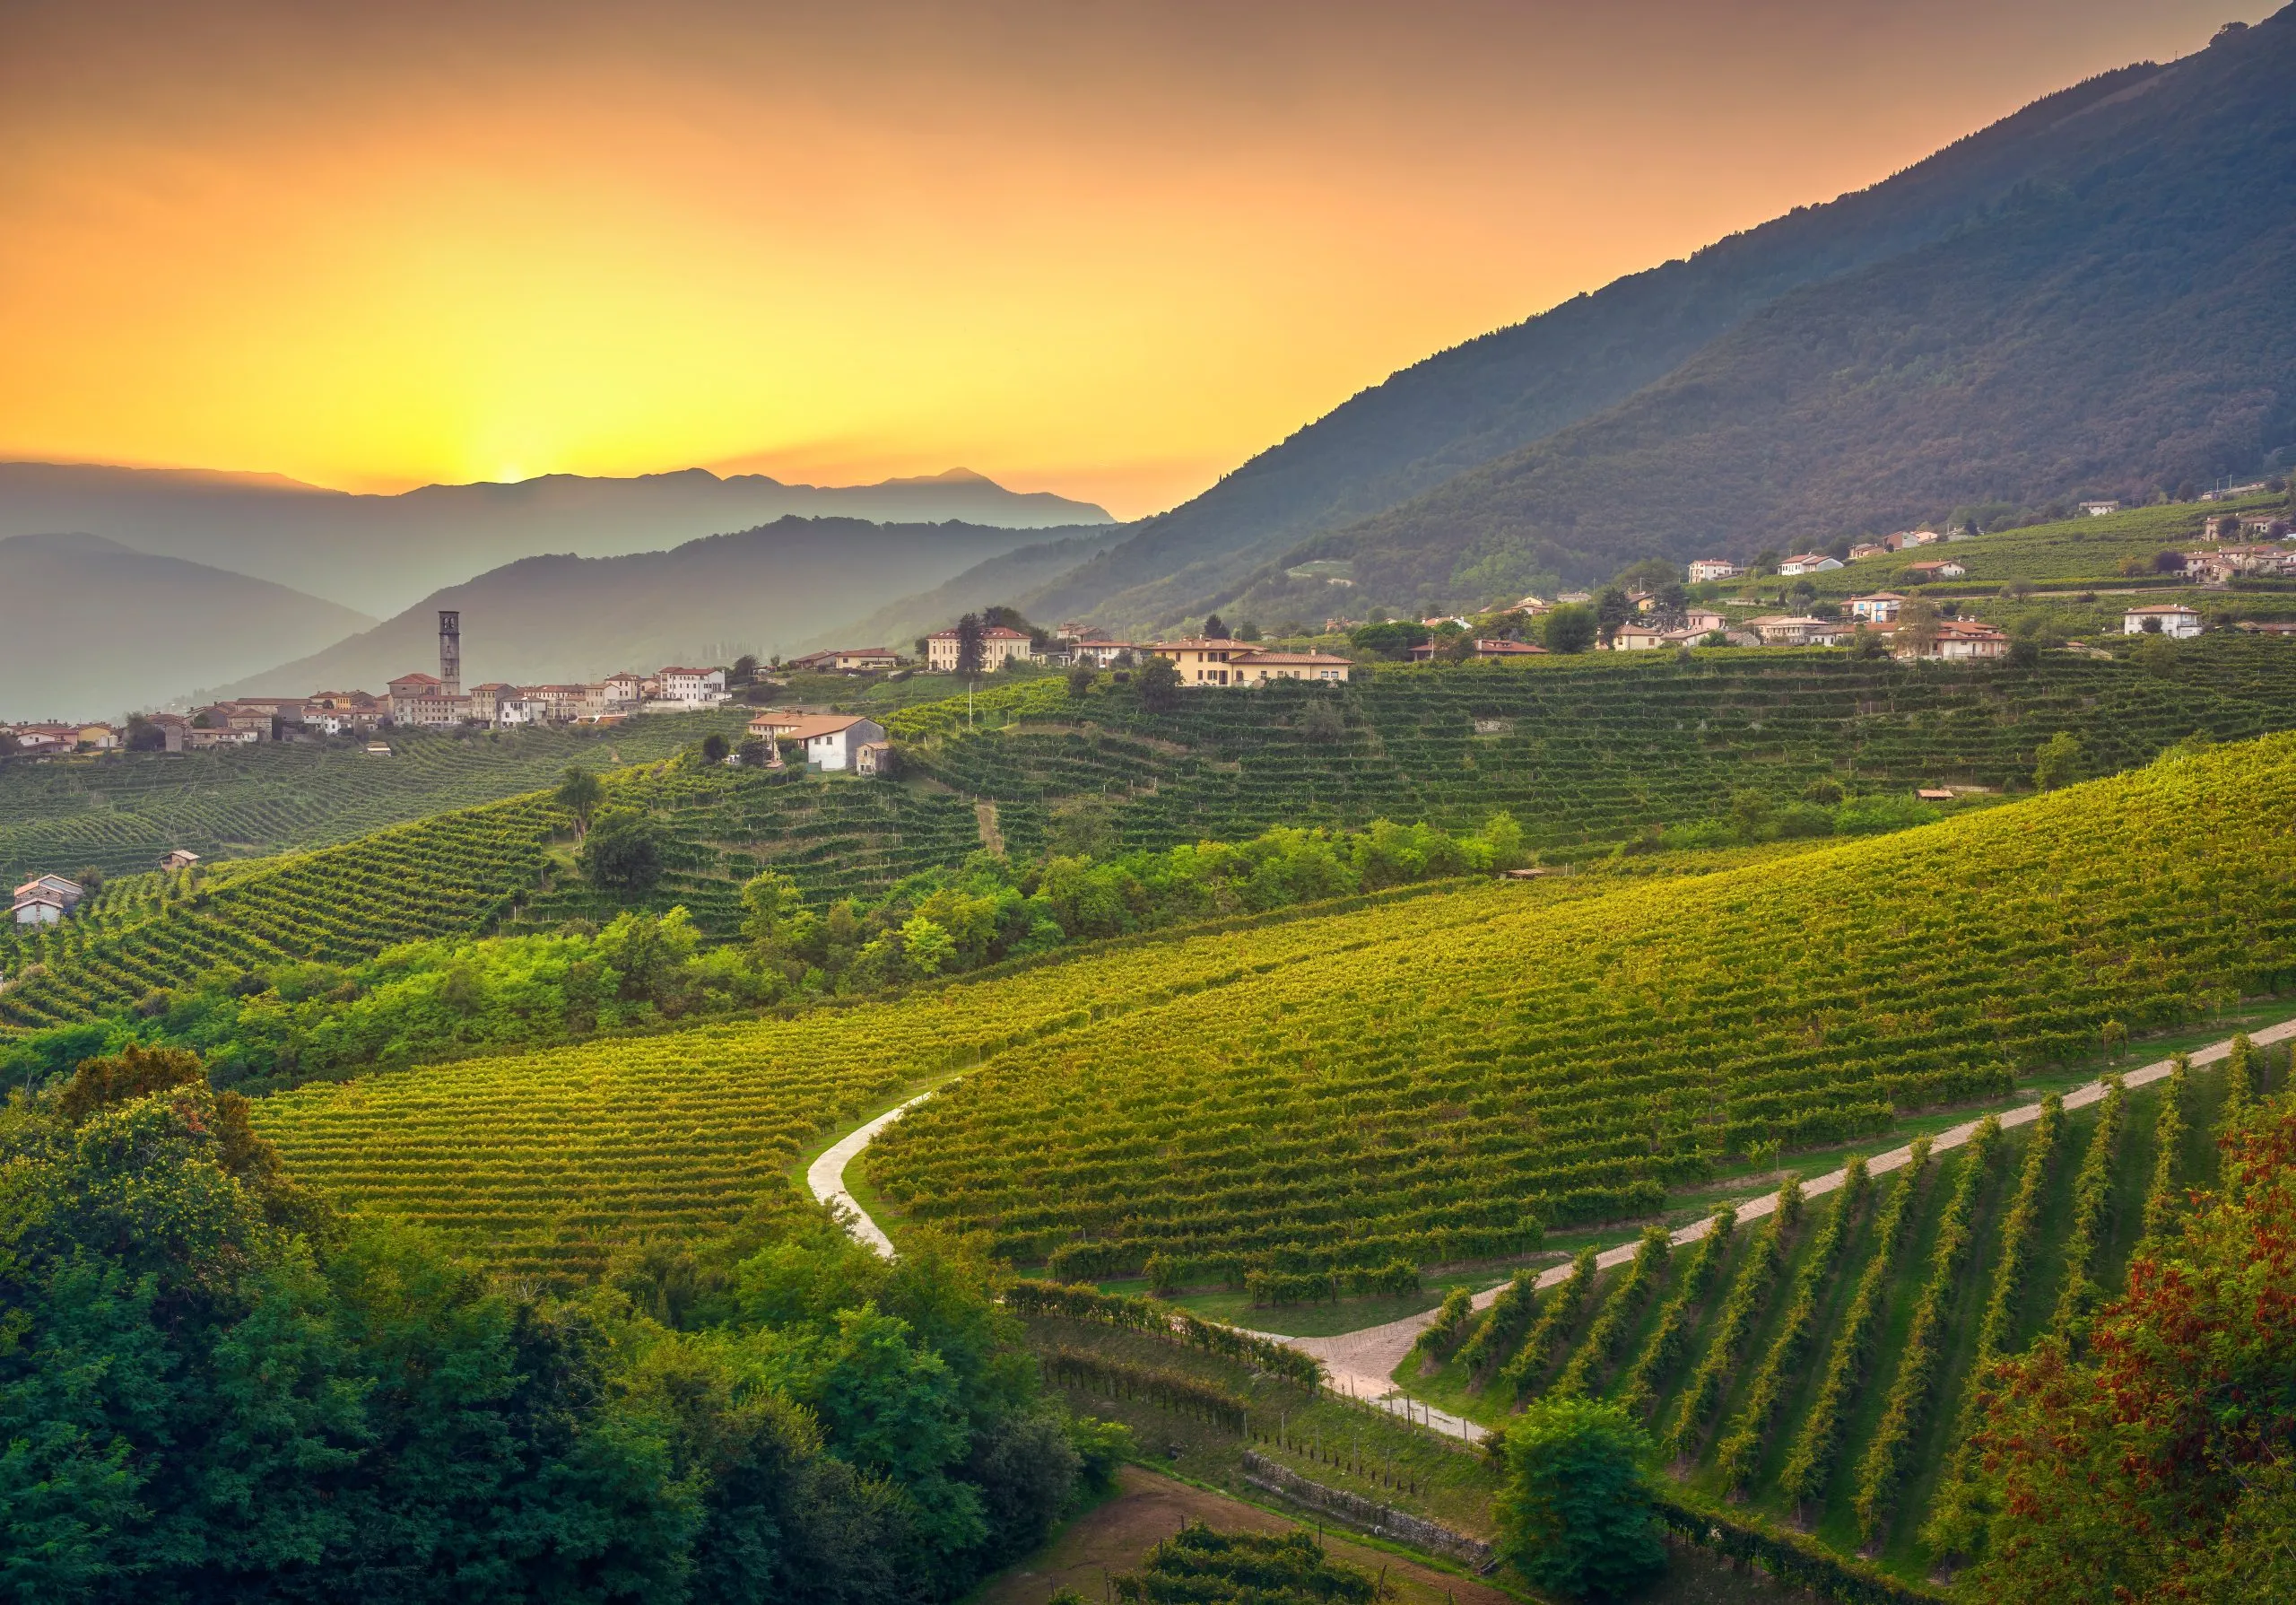 Veneto vineyards